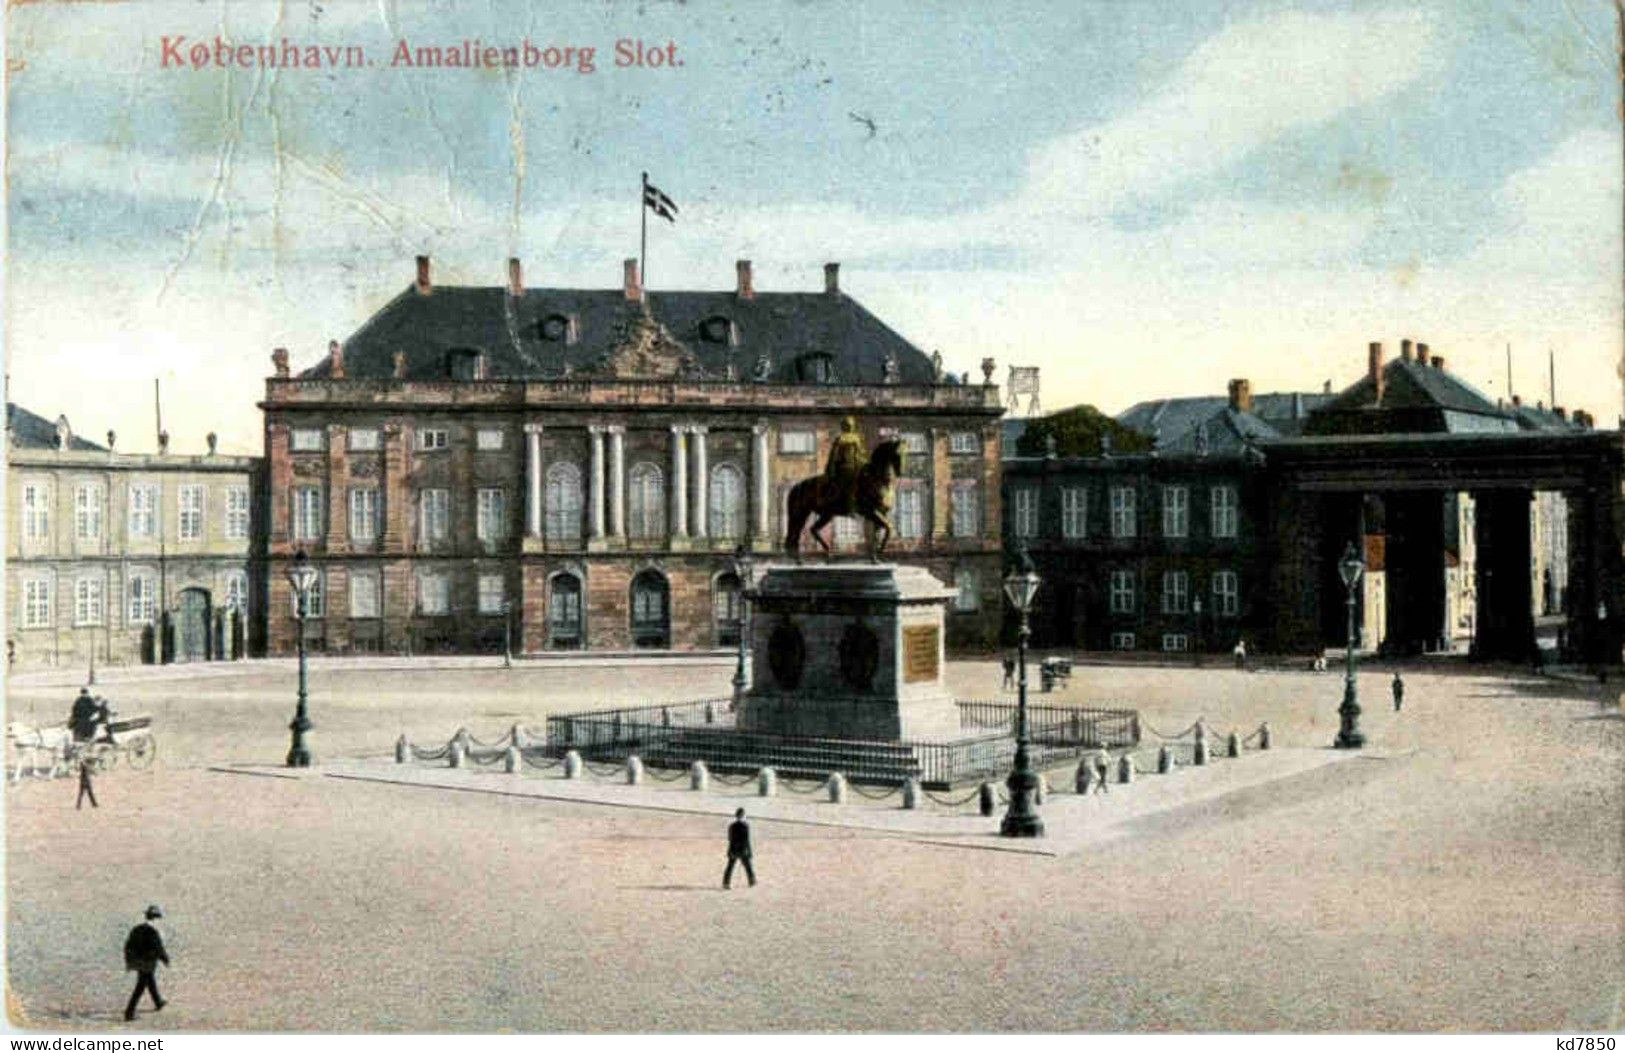 Kobenhavn - Amalienborg Slot - Denmark